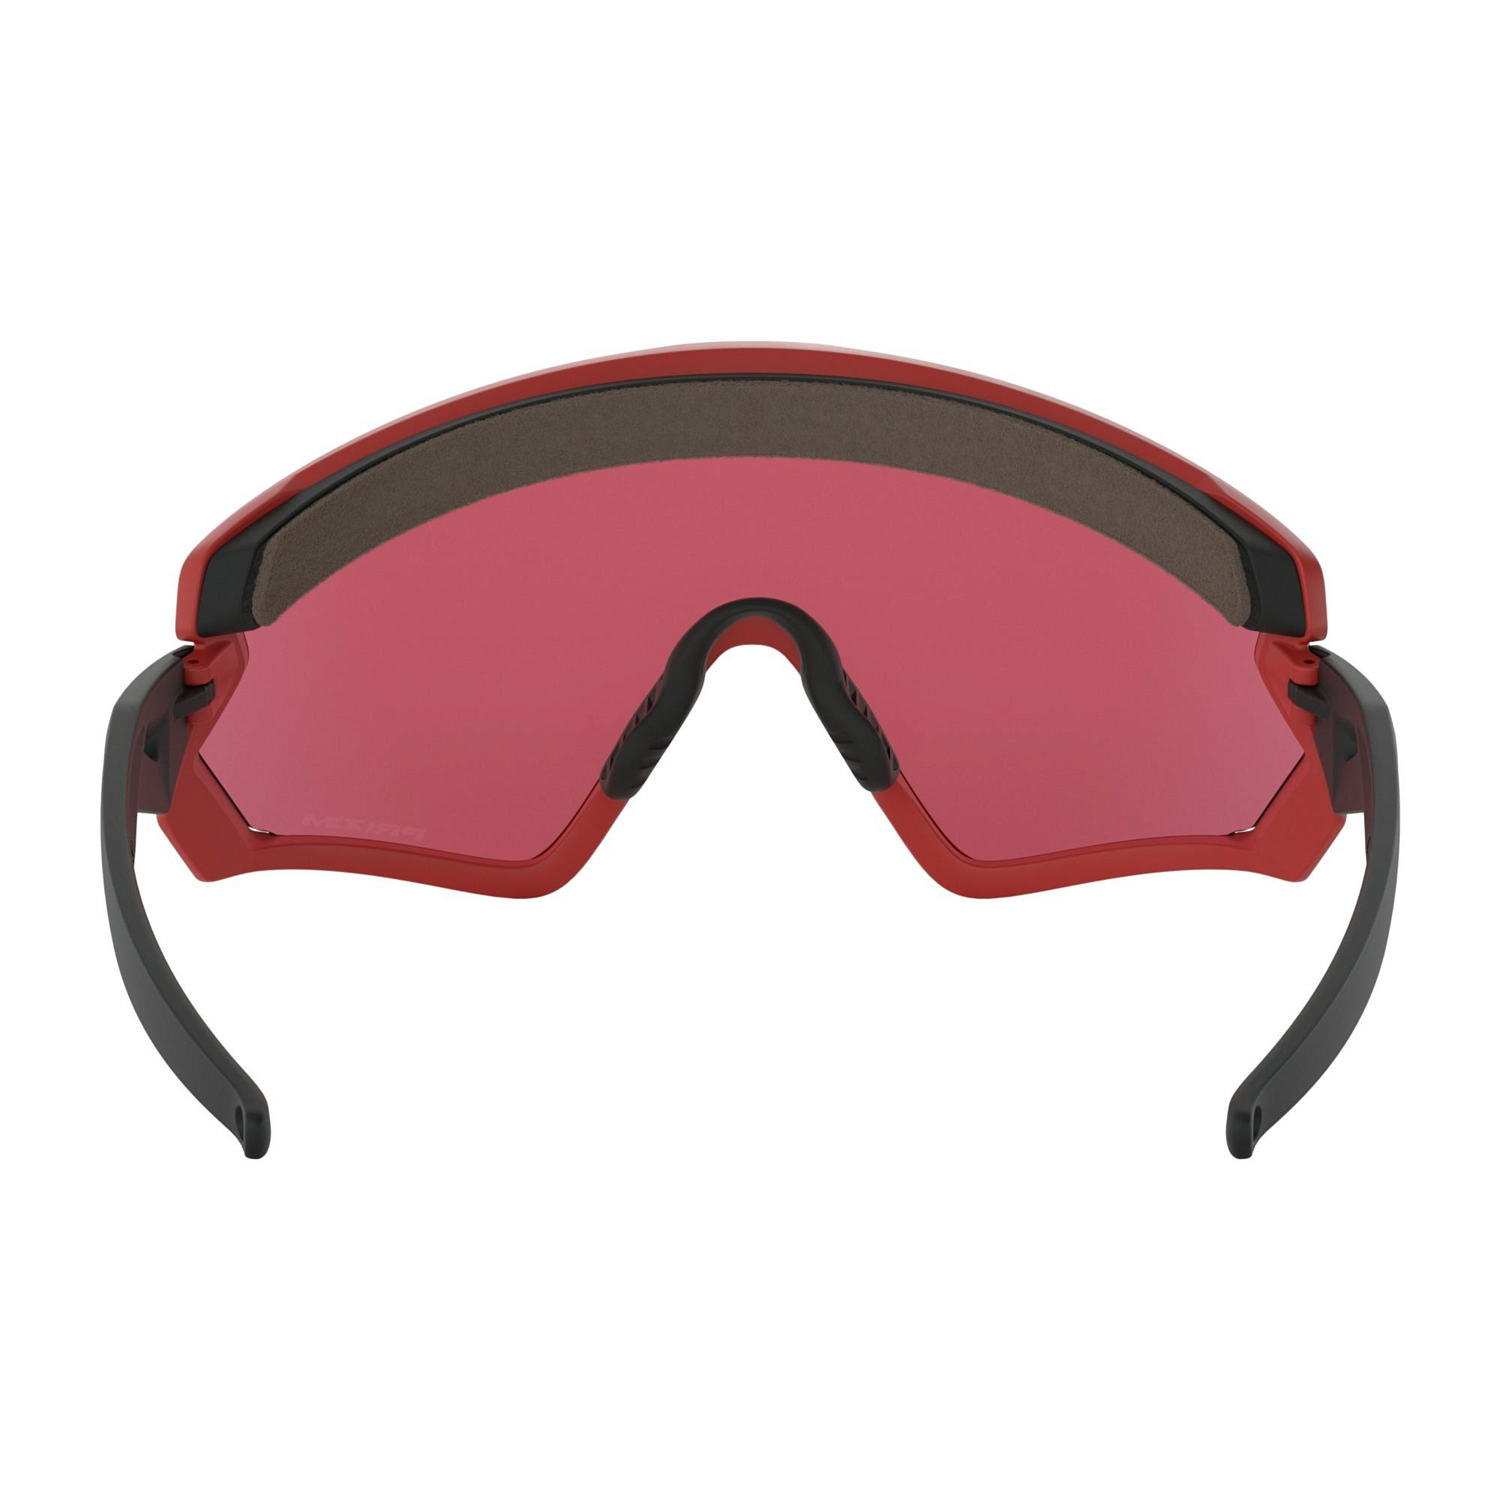 Очки горнолыжные Oakley 2018-19 Wind jacket 2.0 Viper Red / PRIZM Snow Torch